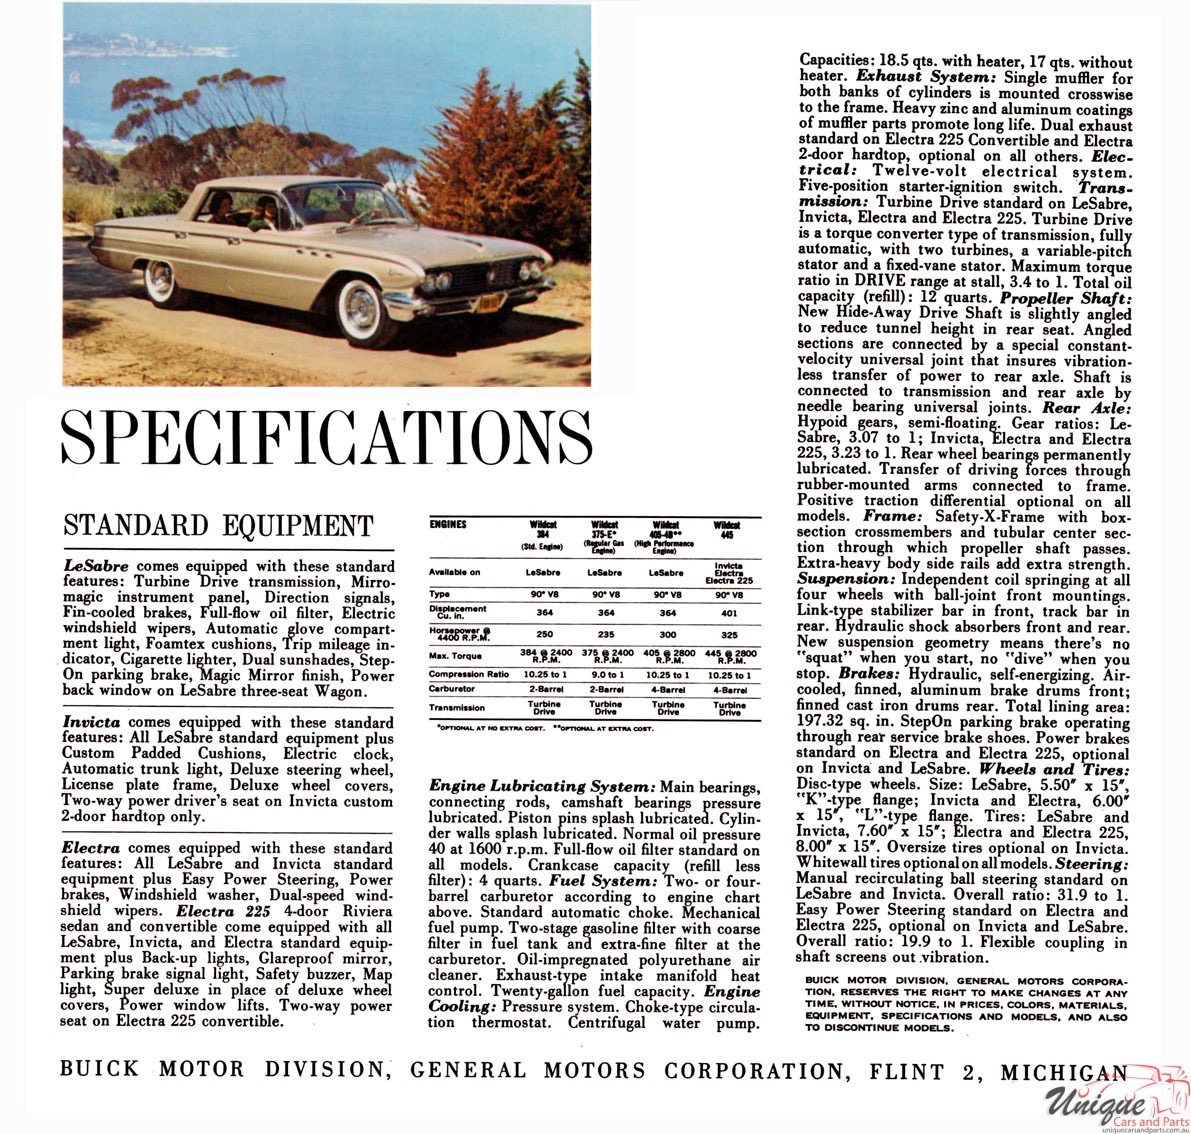 1961 Buick Full-Size Model Range Brochure Page 1